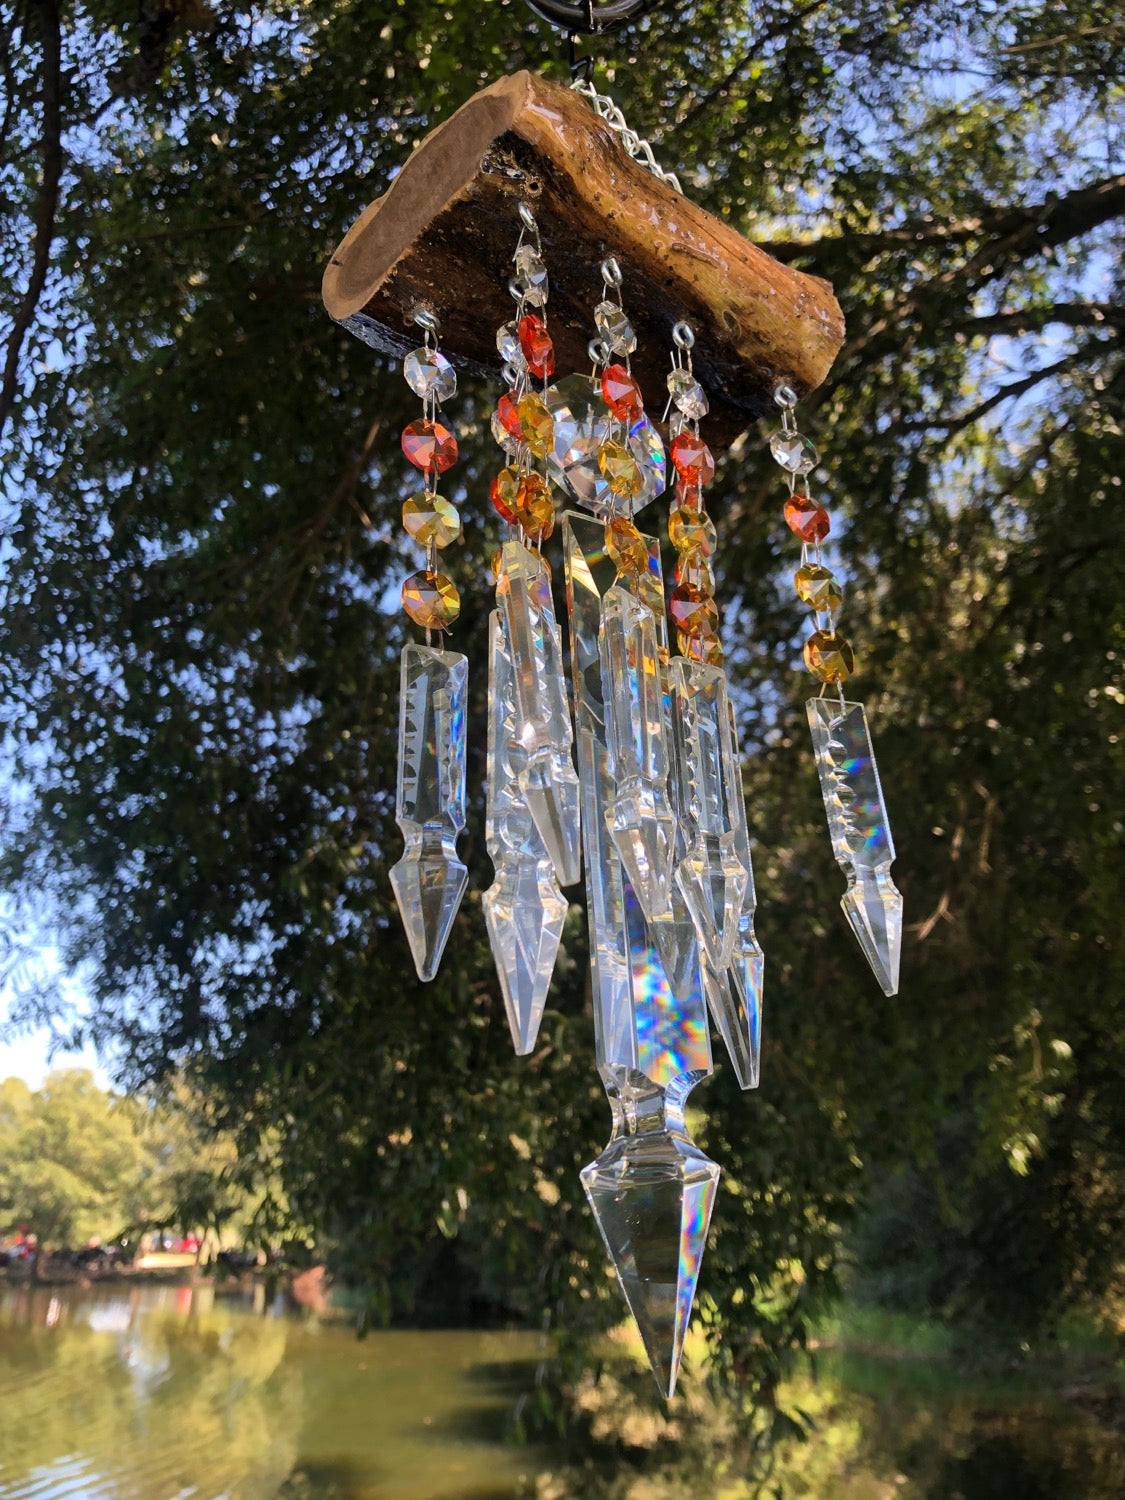 glistening epoxy resin driftwood wind-chime chandelier crystals